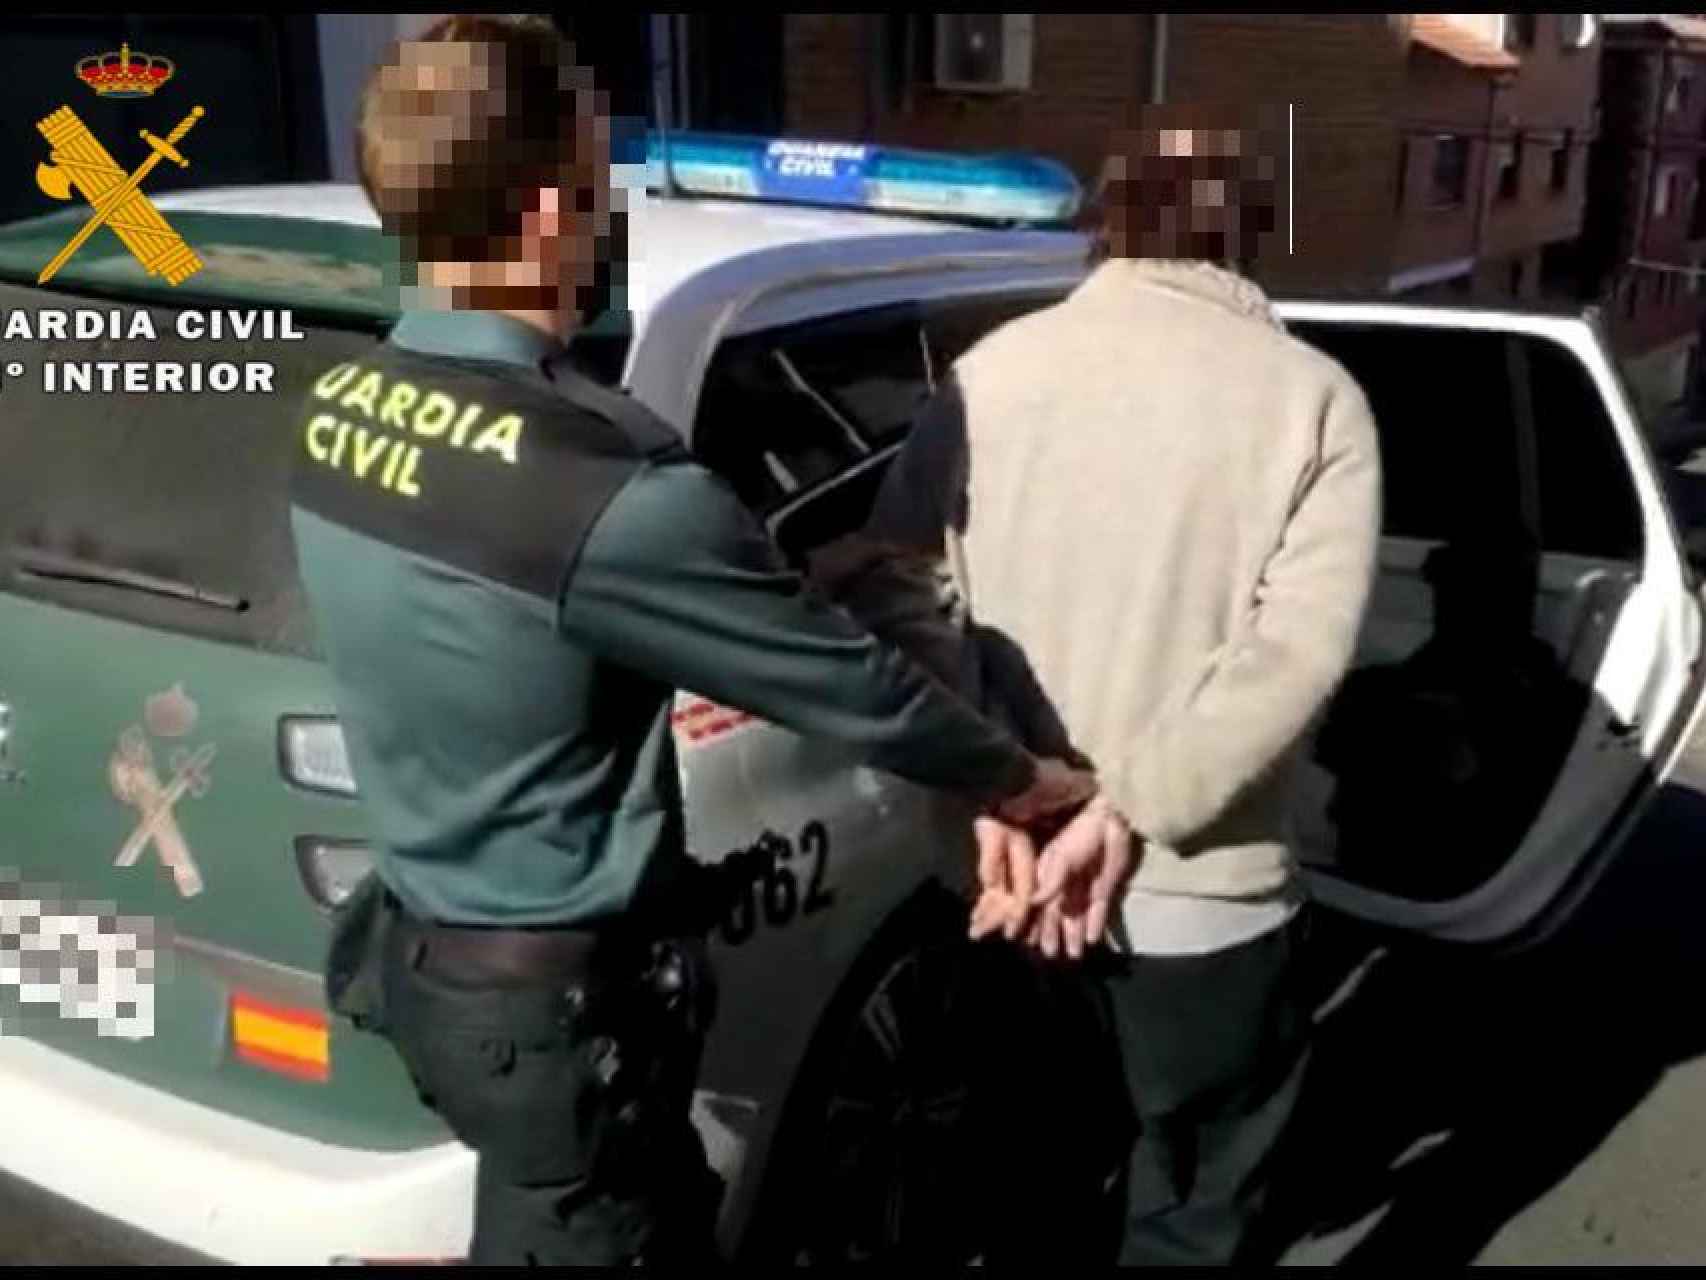 Imagen del detenido facilitada por la Guardia Civil